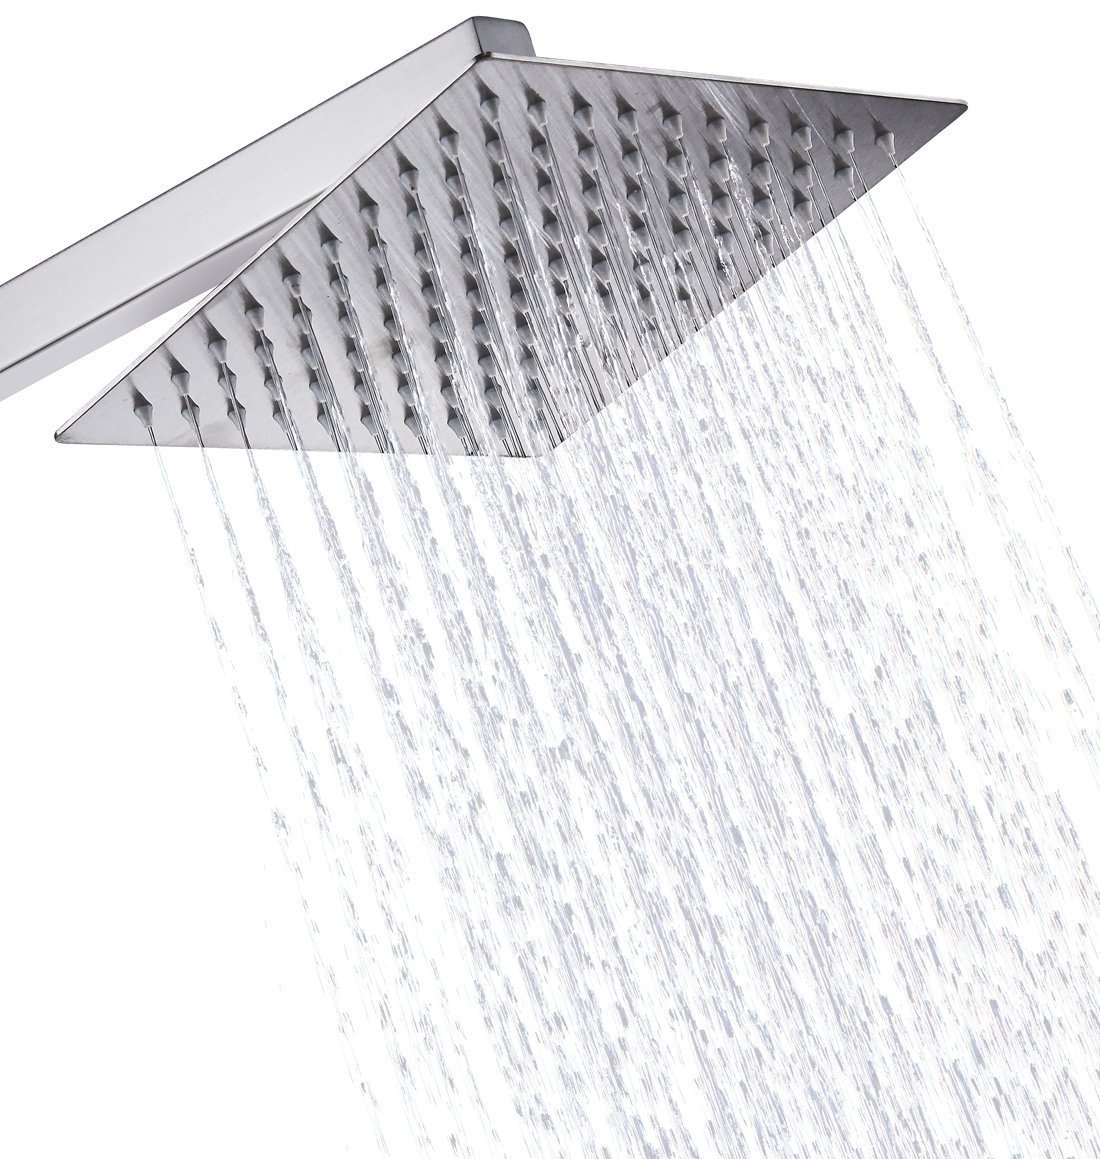 Eyekepper Stainless Steel Shower Head - Rain Style Showerhead, Waterfall Effect, Elegantly Designed, High Polish Chrome, 8-inch Diameter, Ultra Thin, teflon tape included